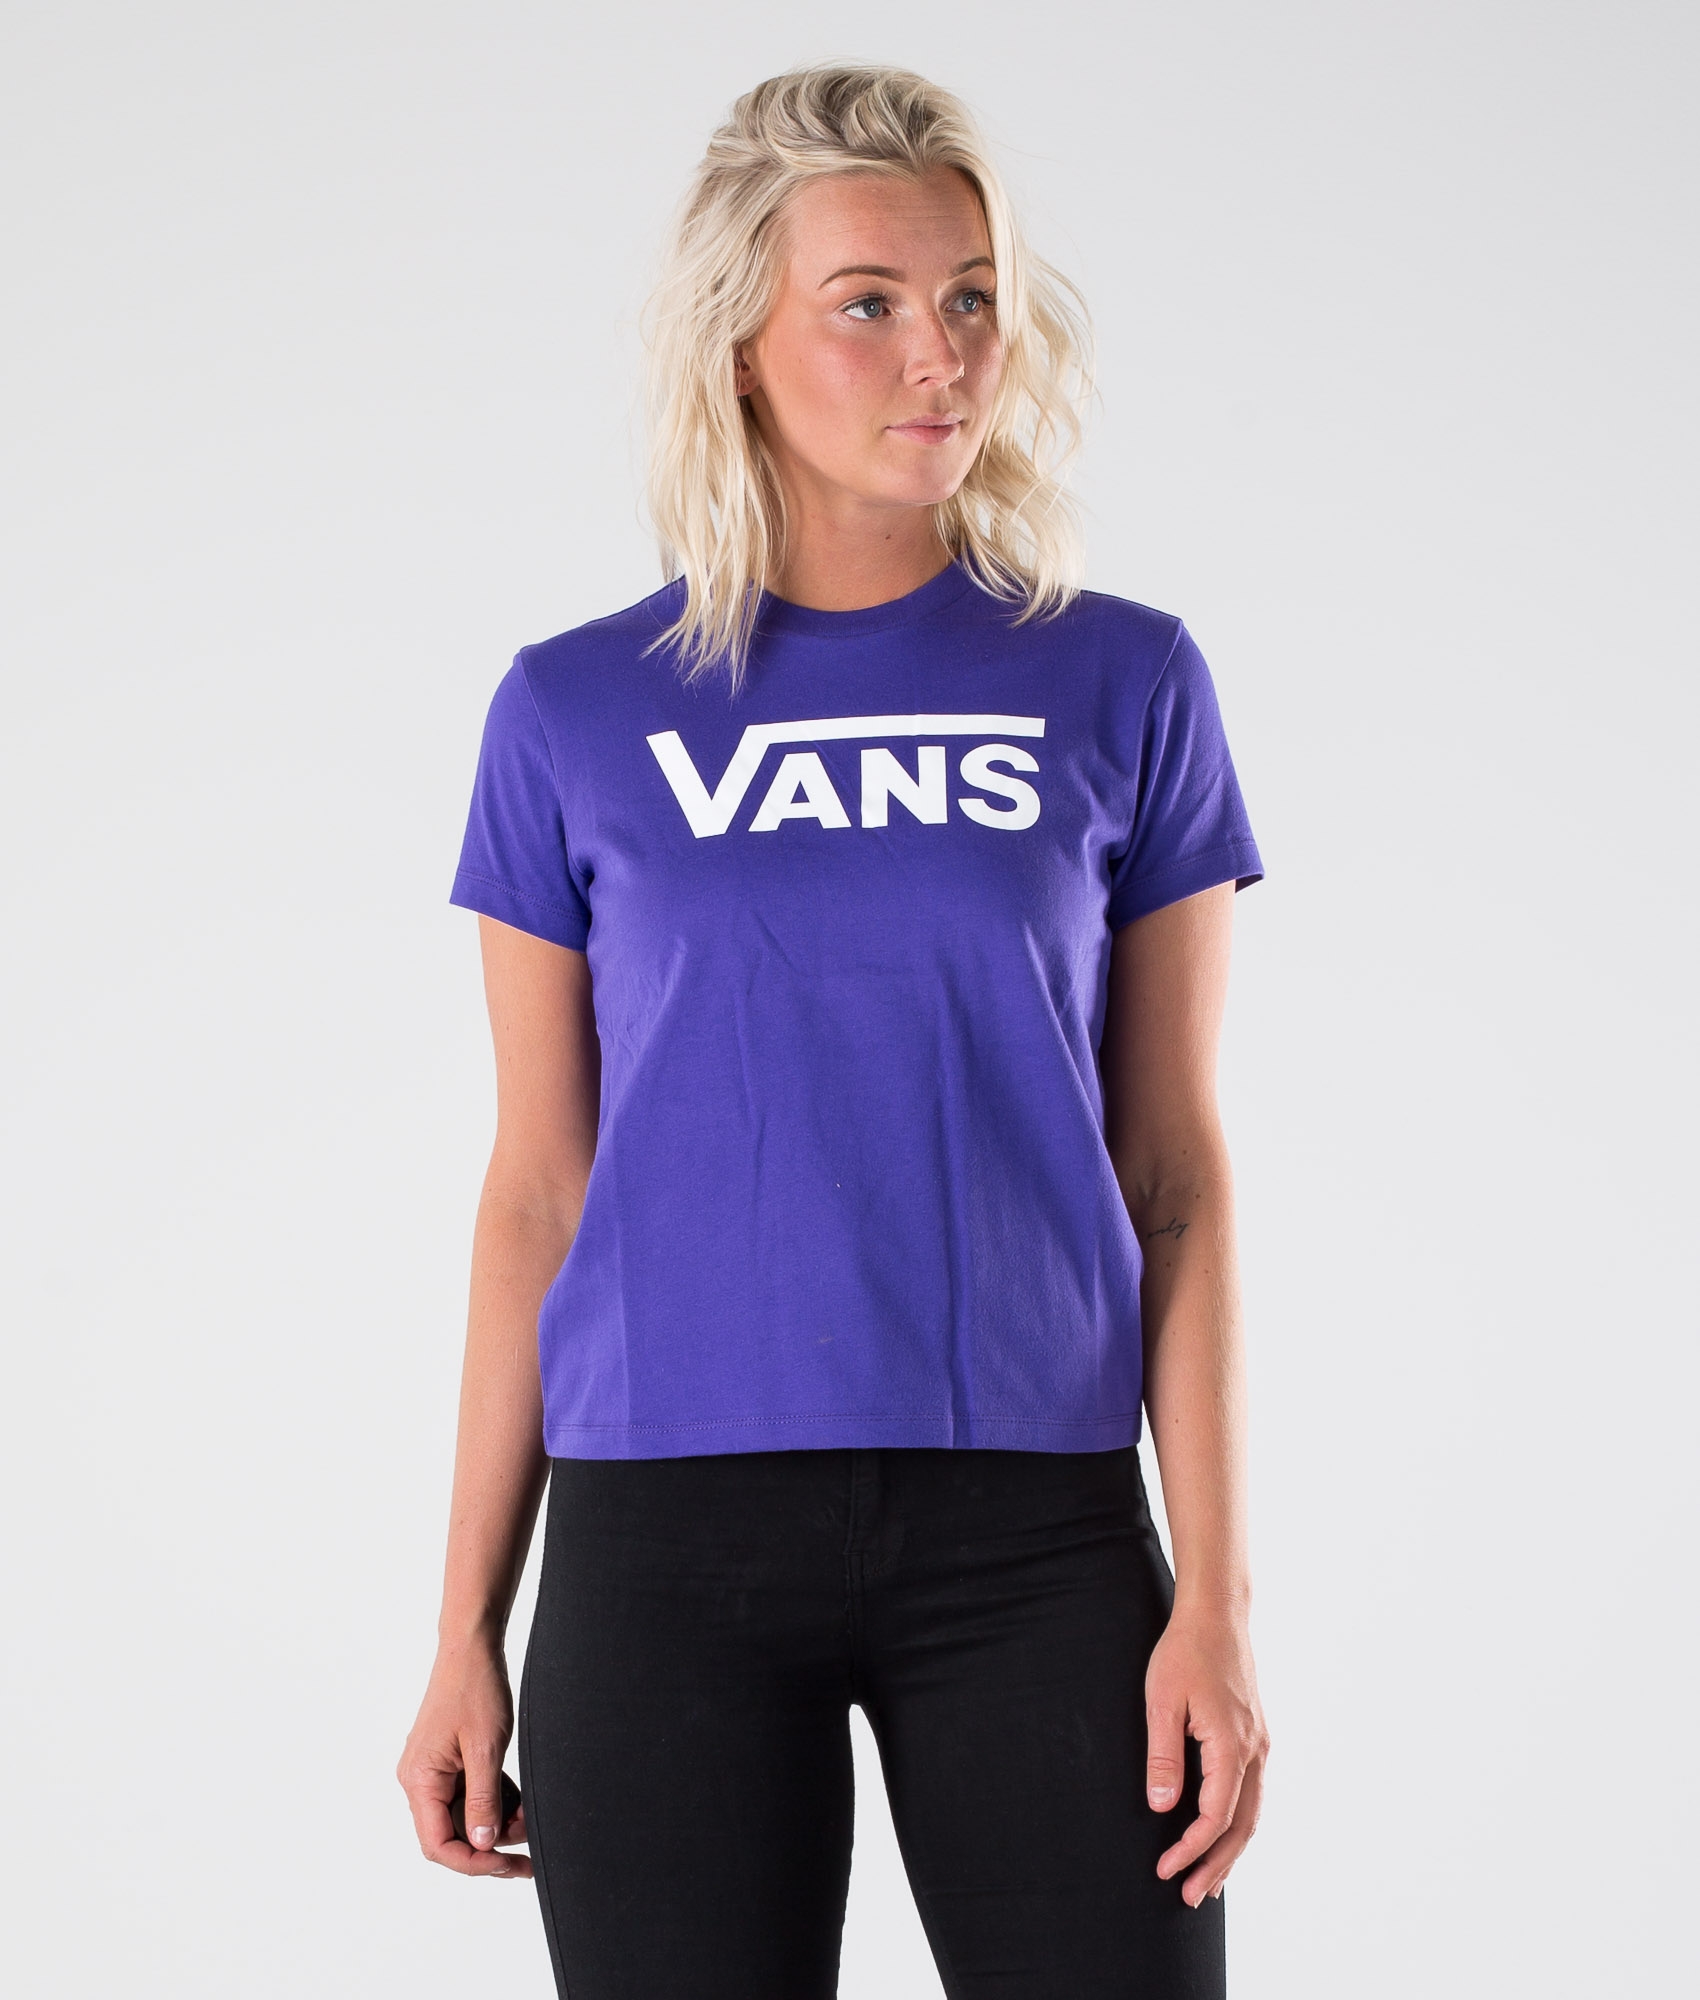 vans t shirt female